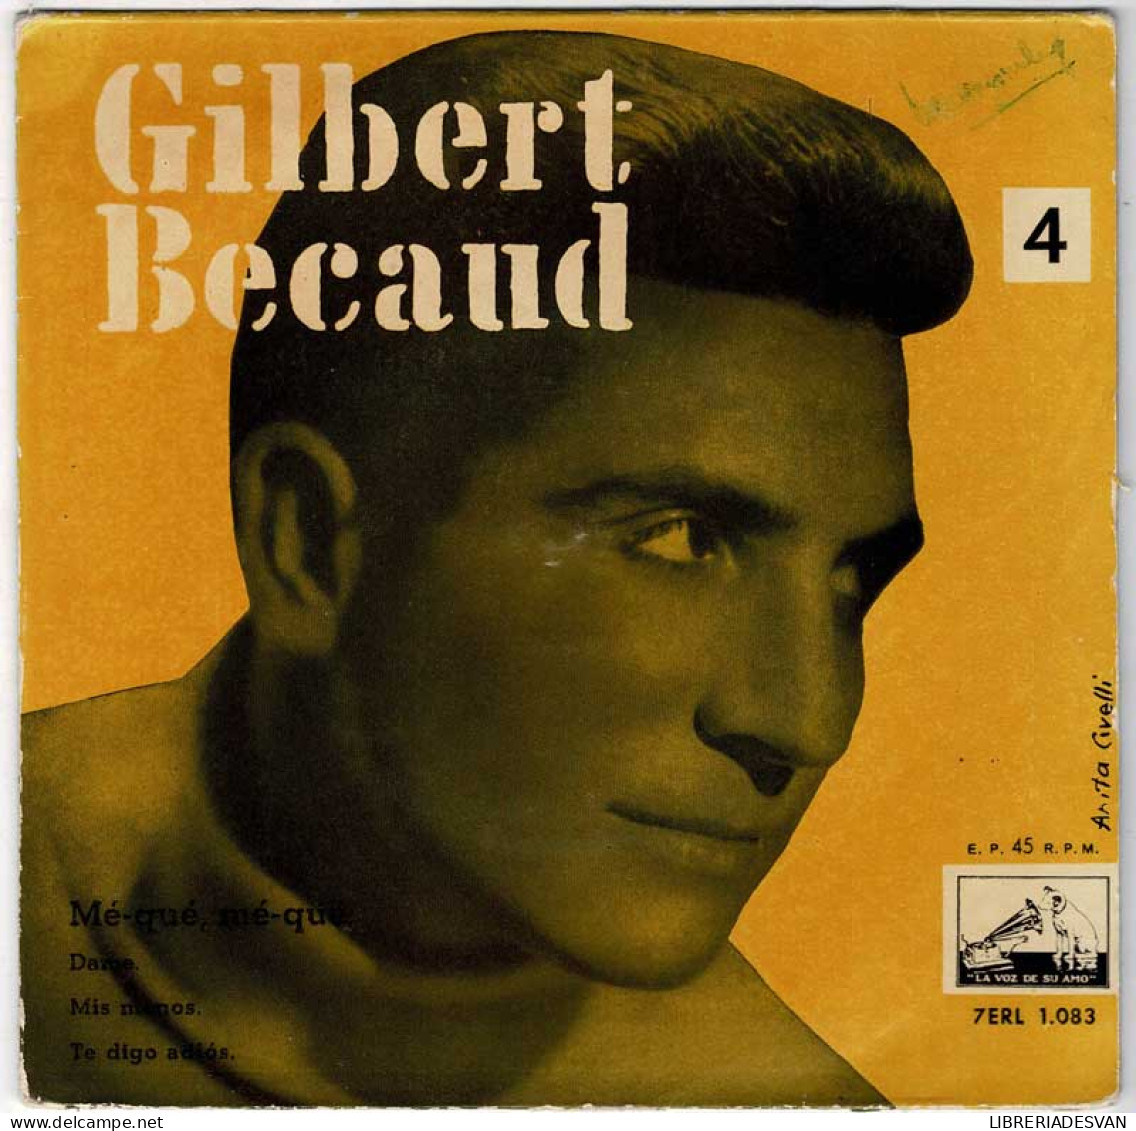 Gilbert Becaud No. 4 - Mé-Qué, Mé-qué + 3. EP - Unclassified